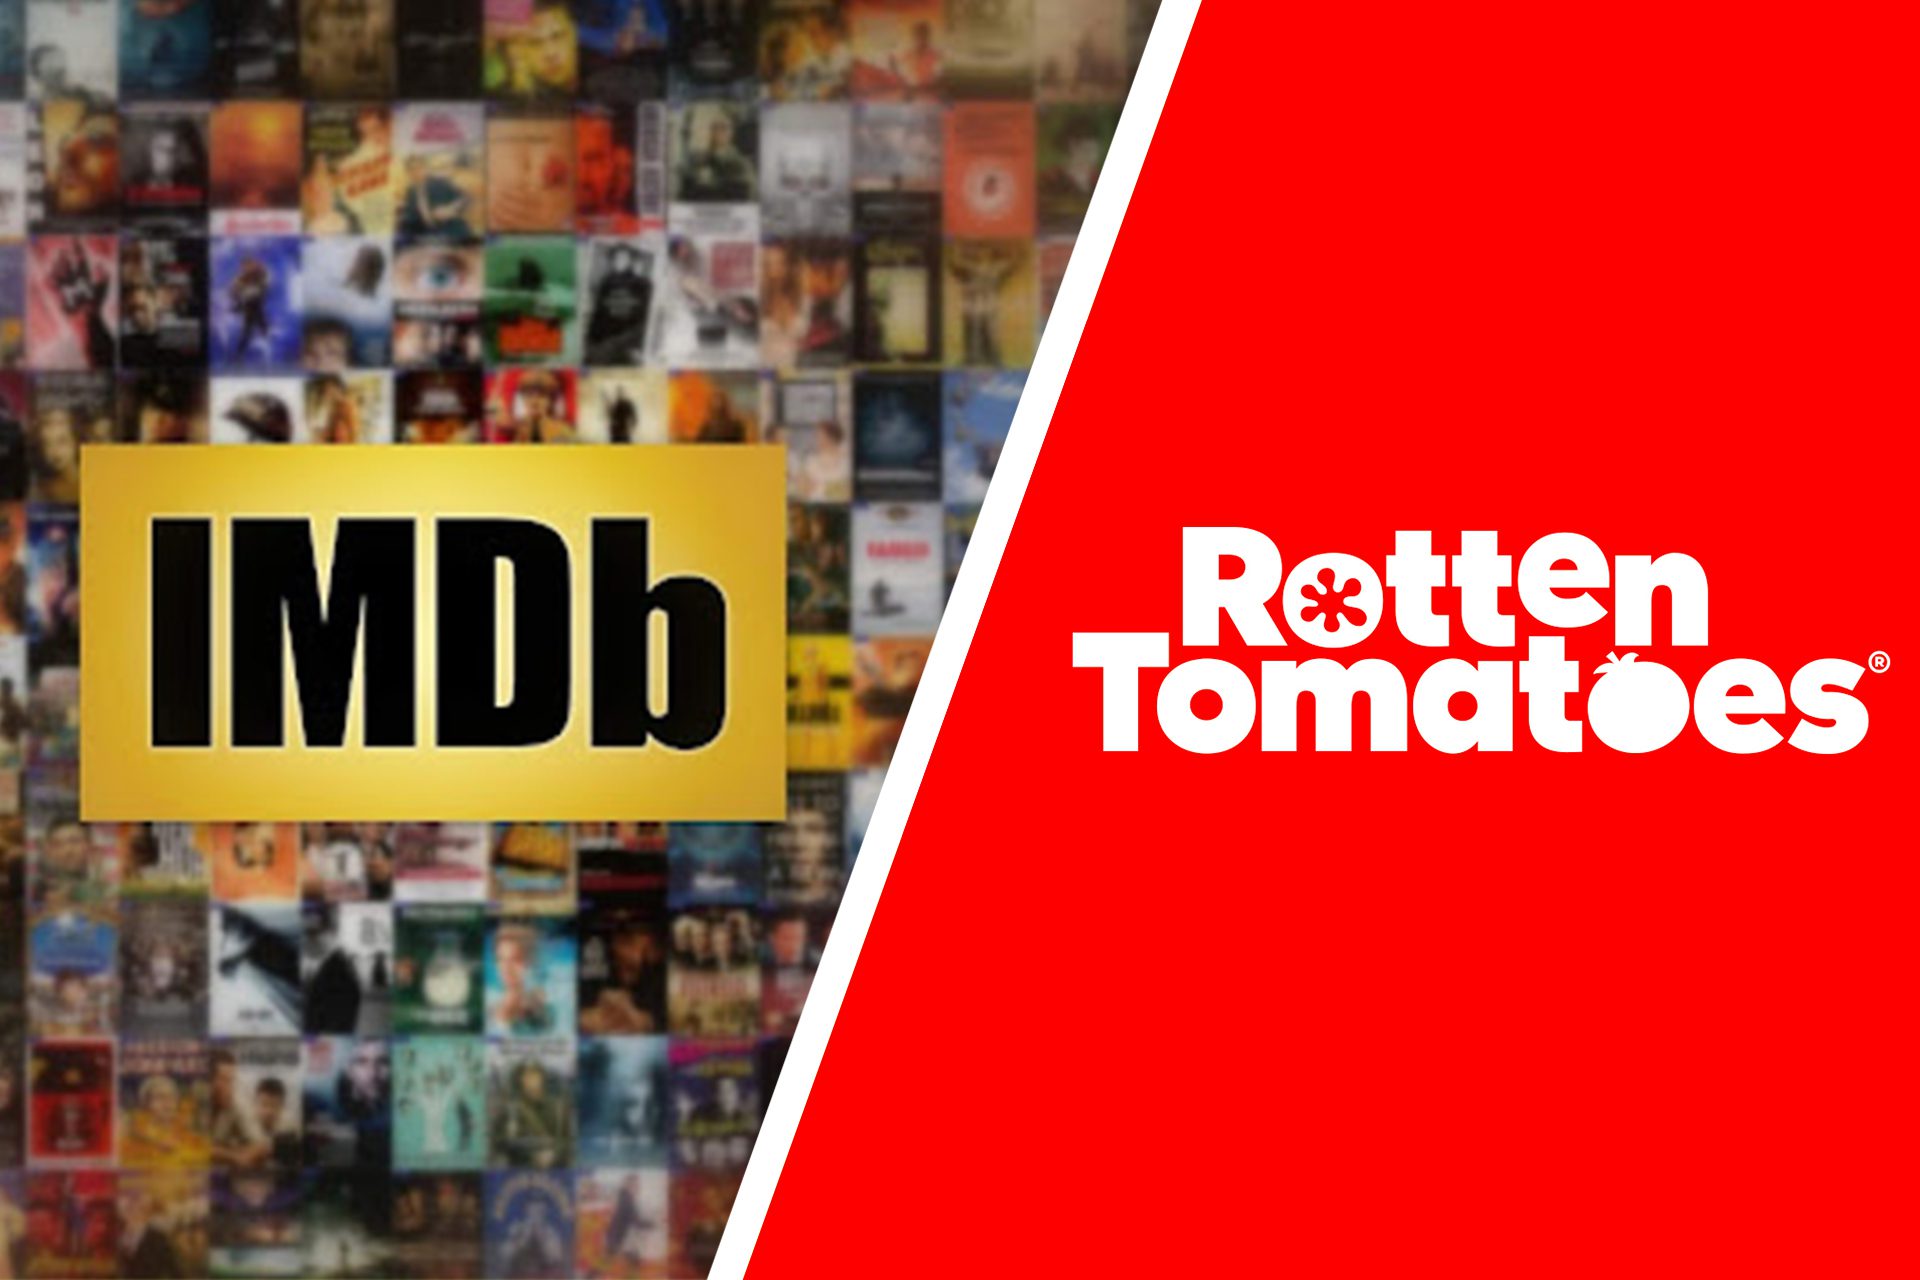 How Does CinemaScore Work? Rotten Tomatoes, IMDb, and Metacritic